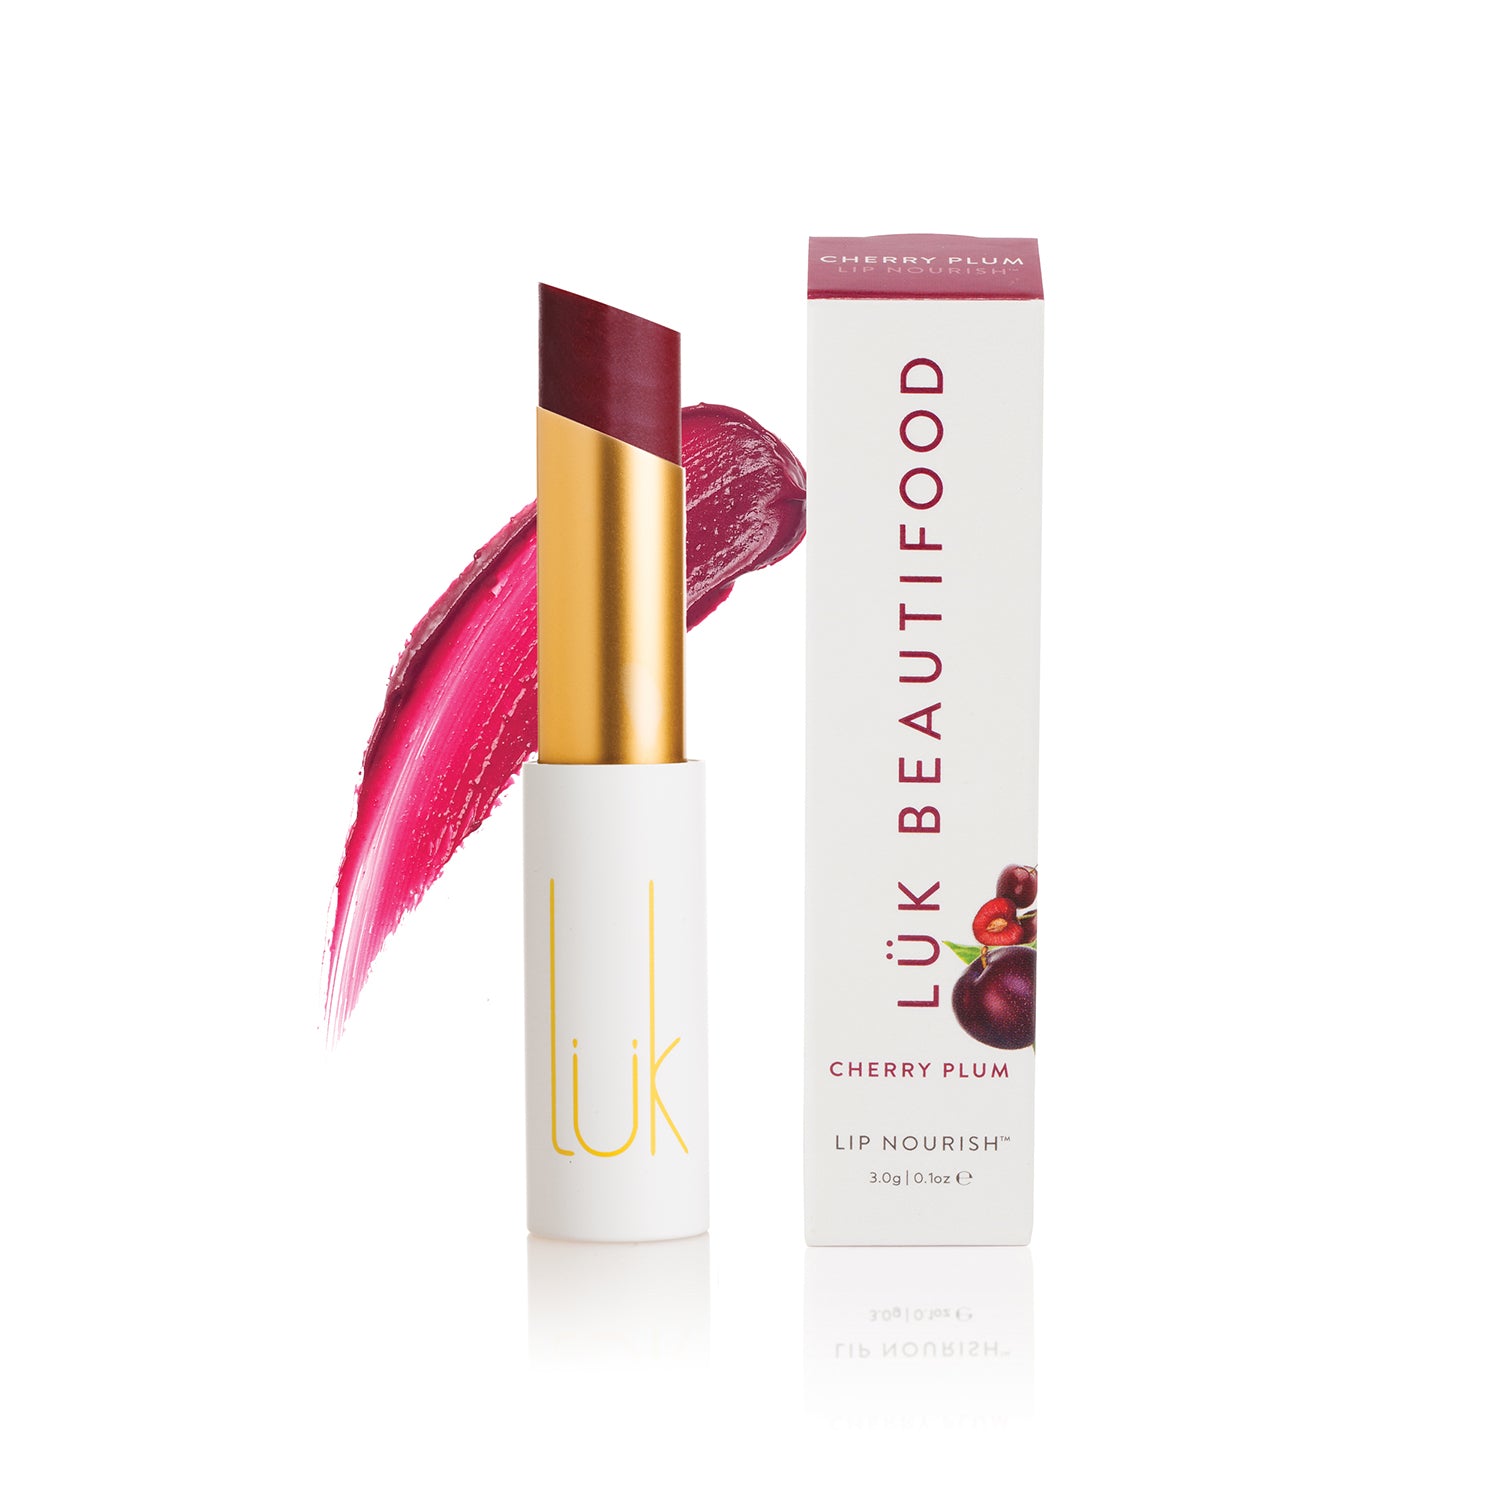 100% Natural Lip Nourish™ Cherry Plum Lük Beautifood